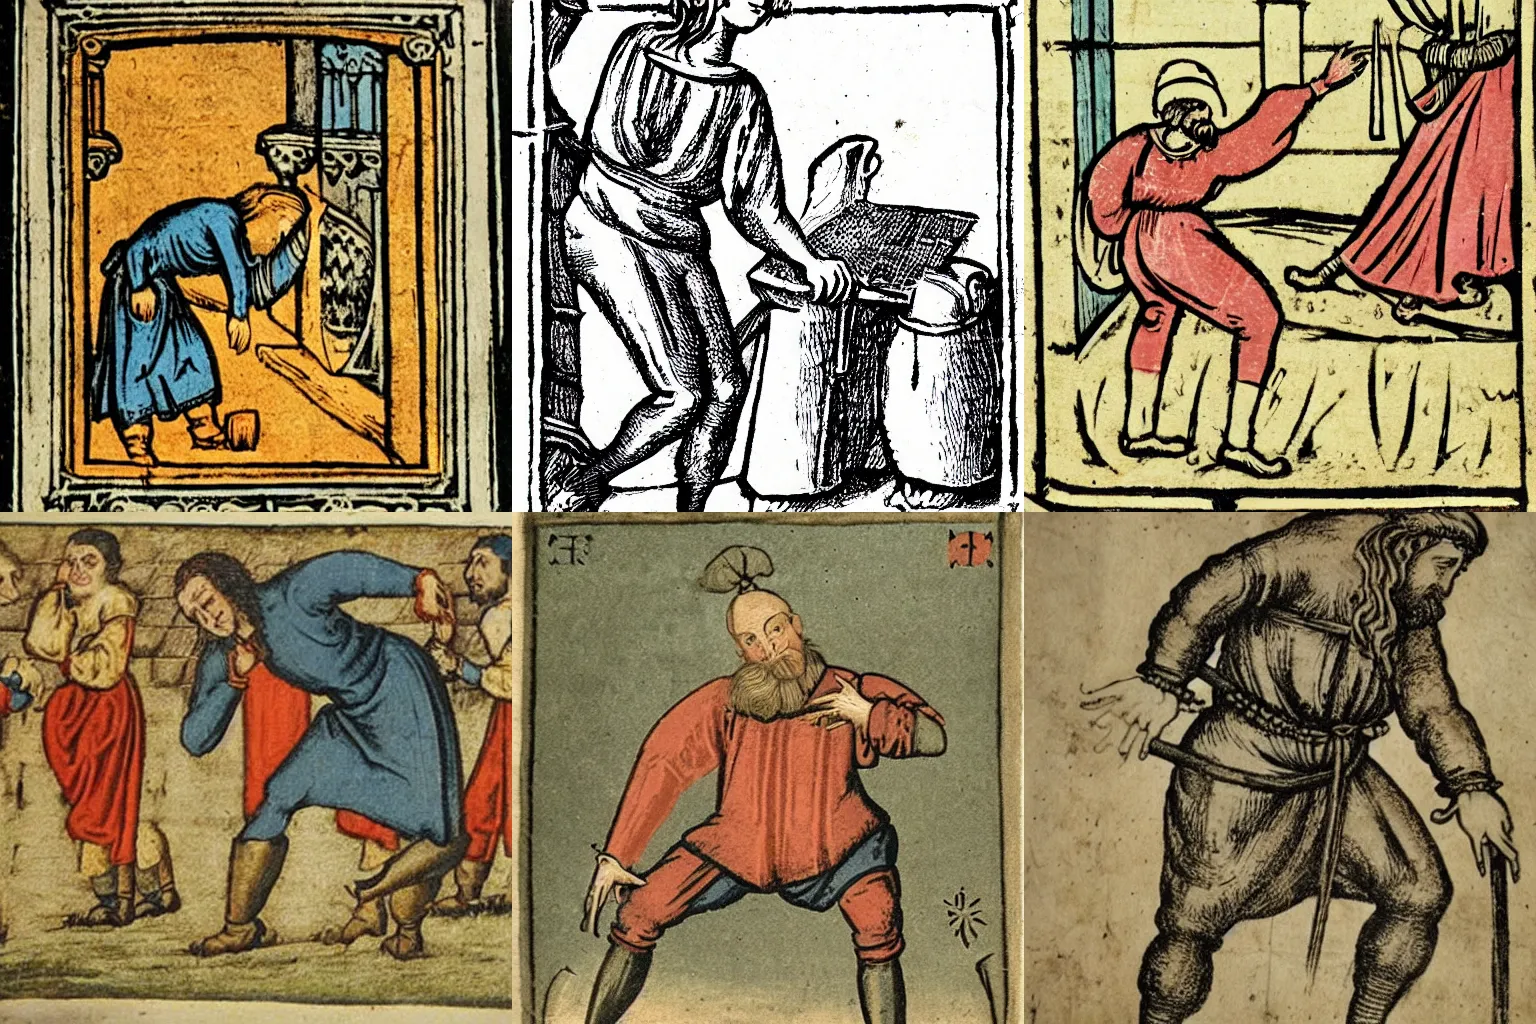 Prompt: Medieval lithograph of peasant twerking